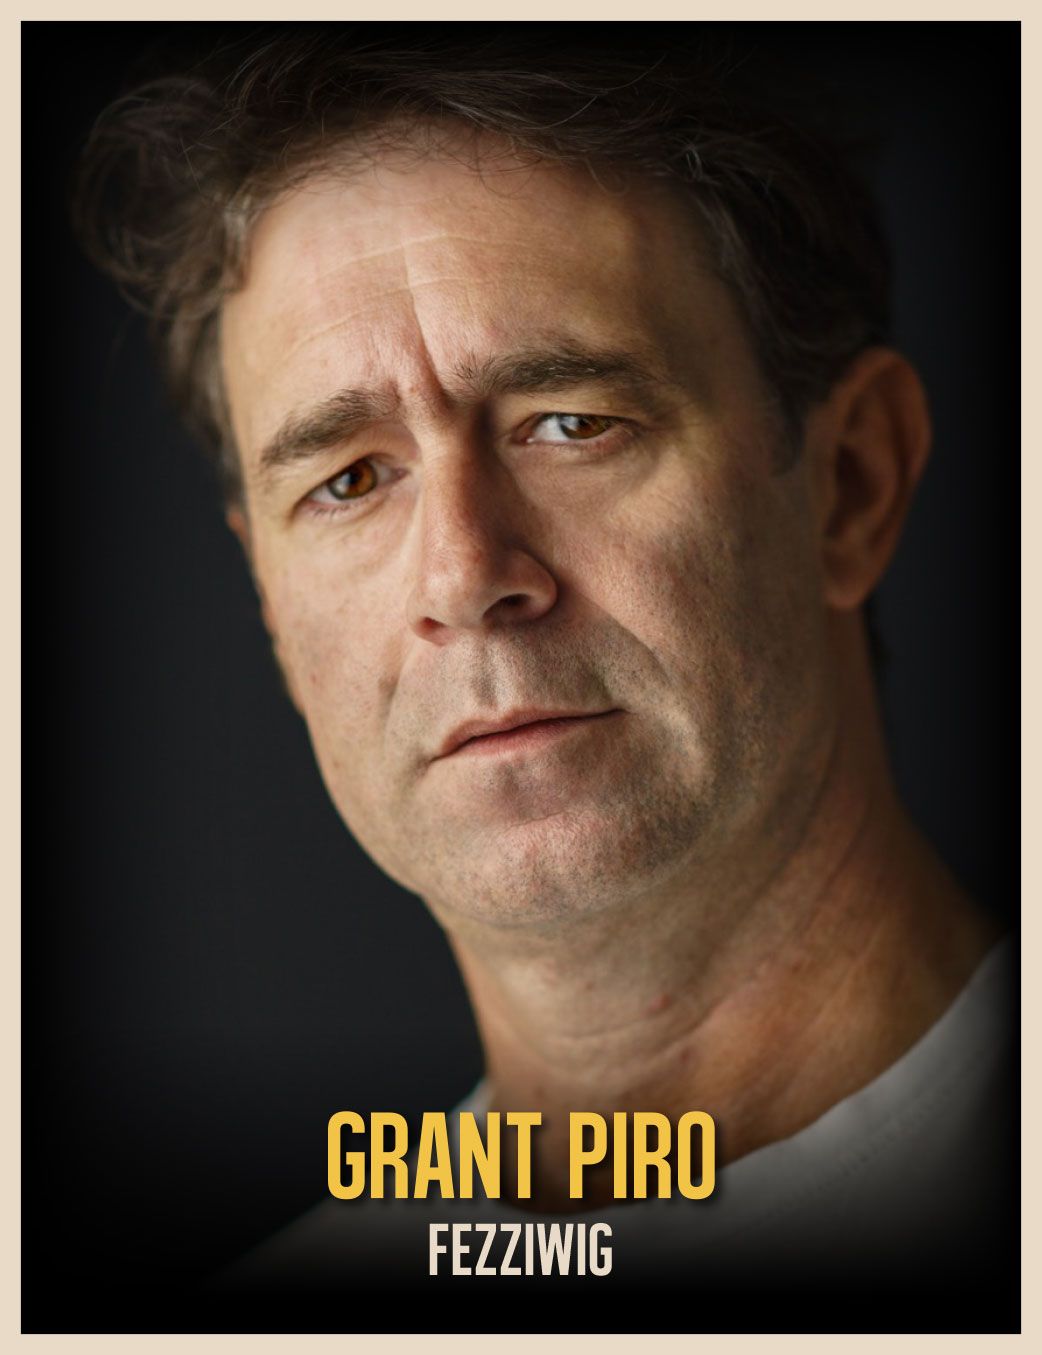 Grant Piro